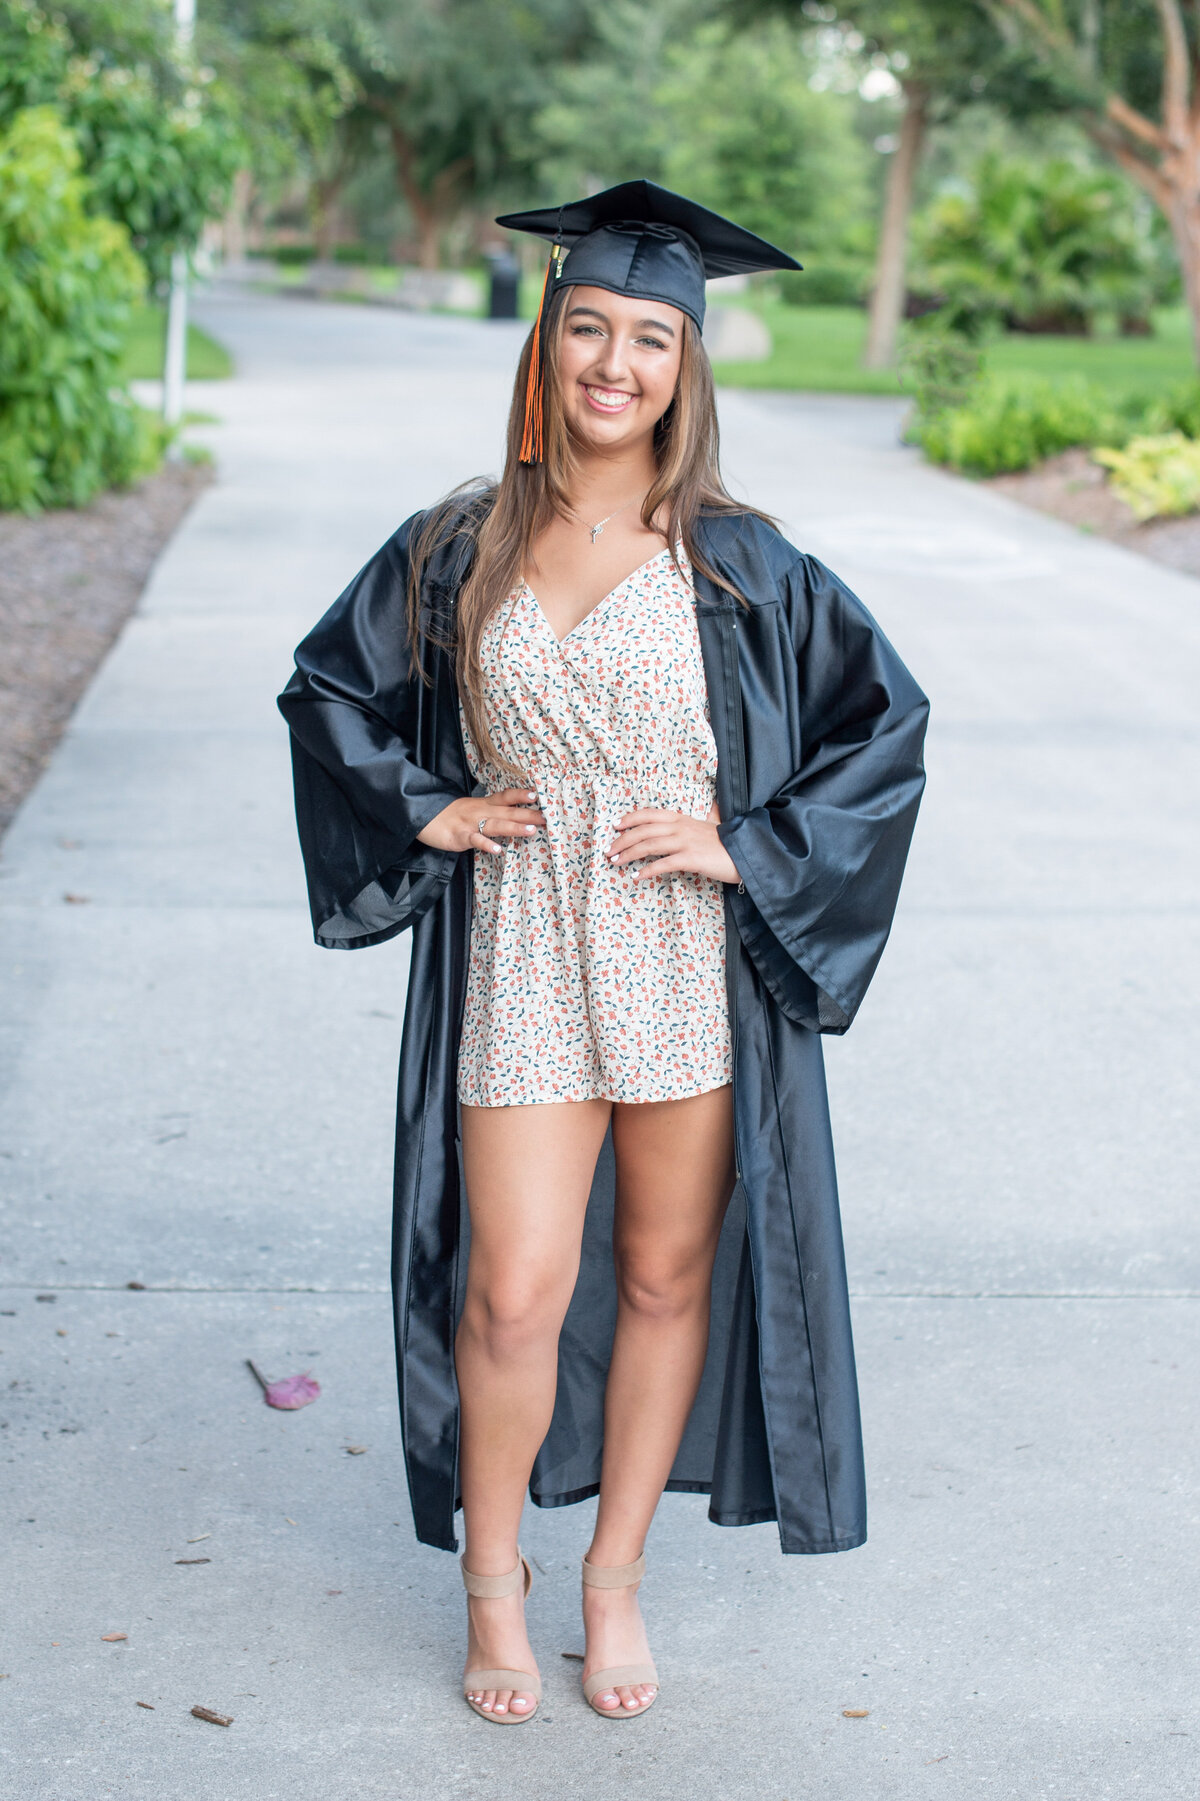 High school senior girl in cap and gown by Orlando Senior Photographer Khim Higgins.